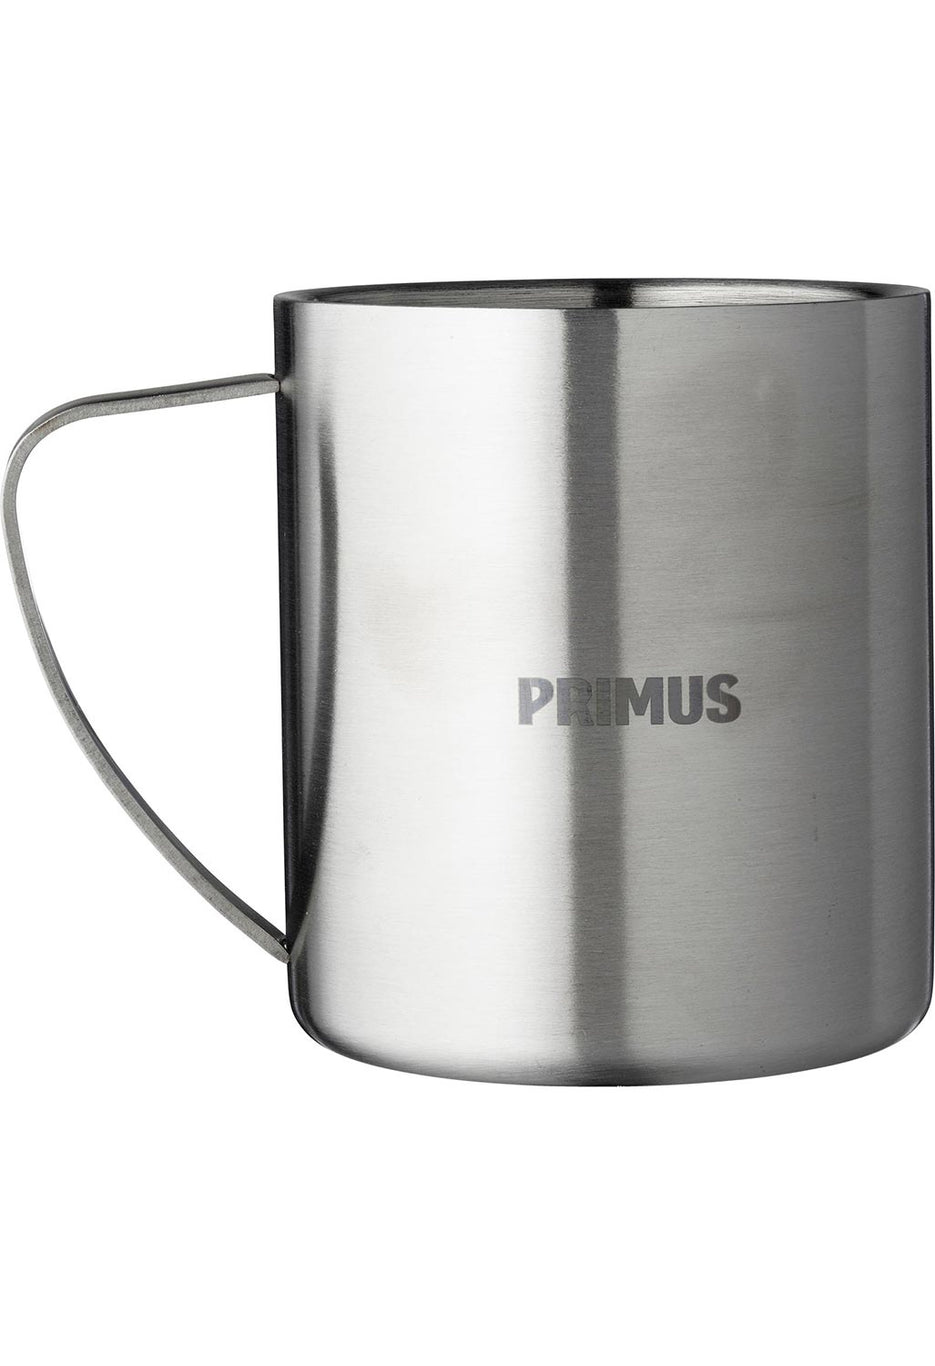 Primus 4-Season Mug 0.3L 0